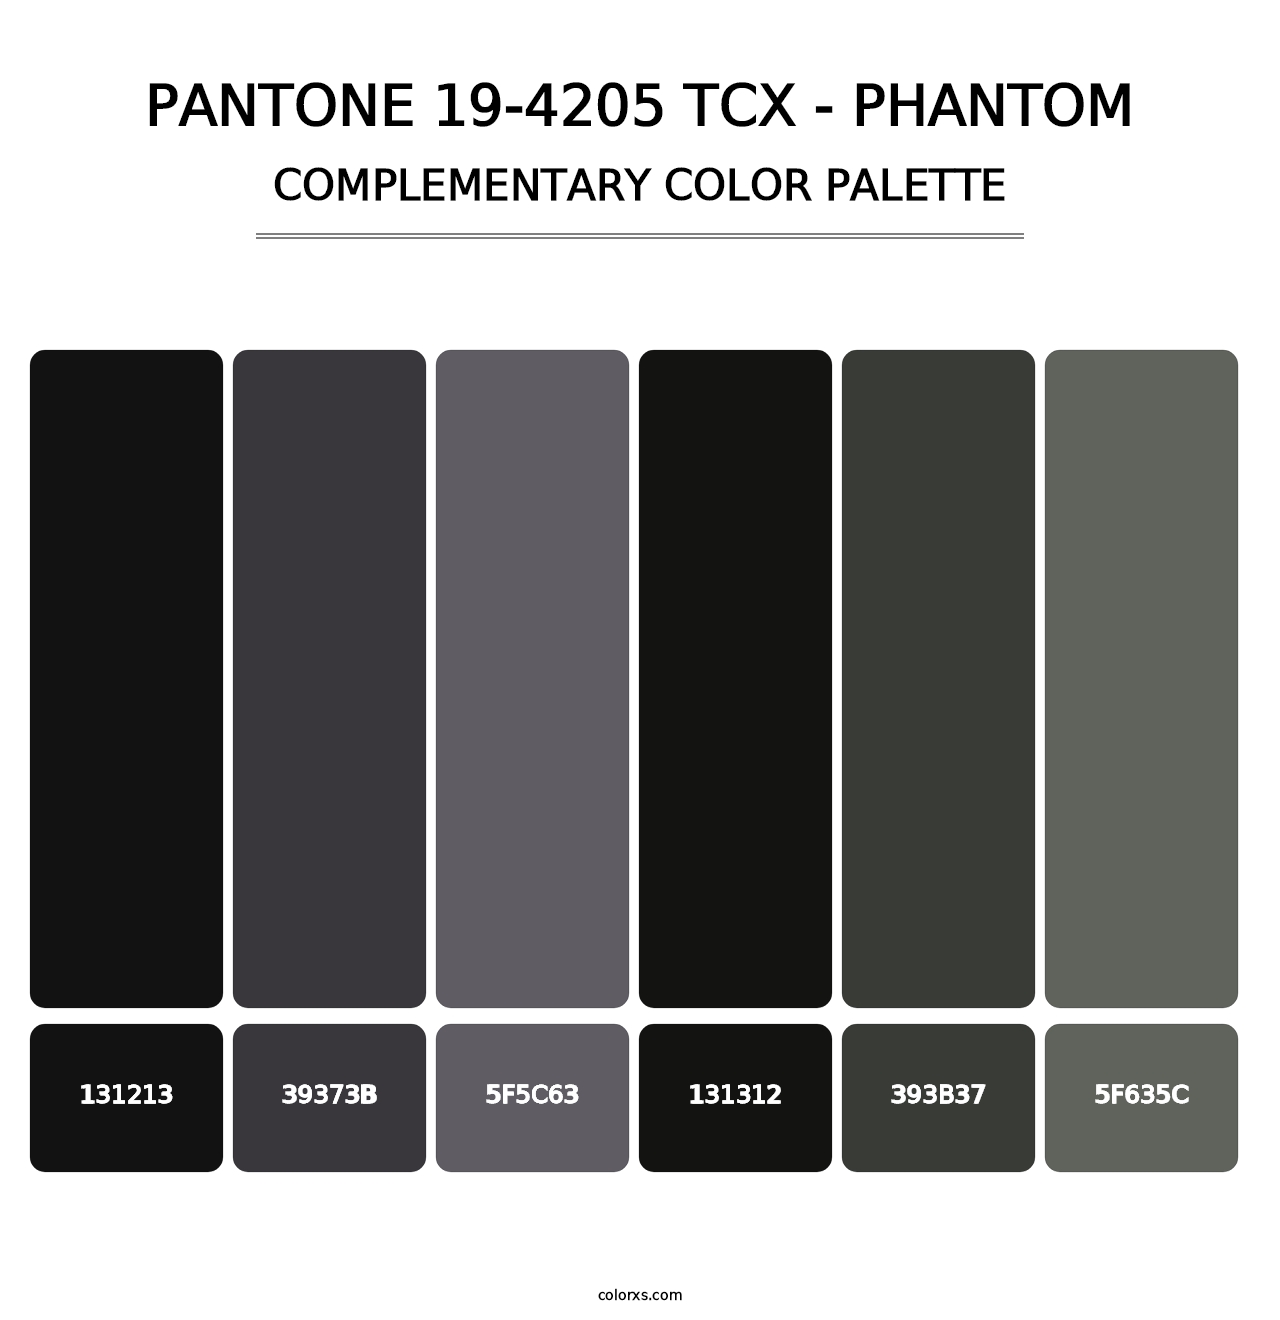 PANTONE 19-4205 TCX - Phantom - Complementary Color Palette